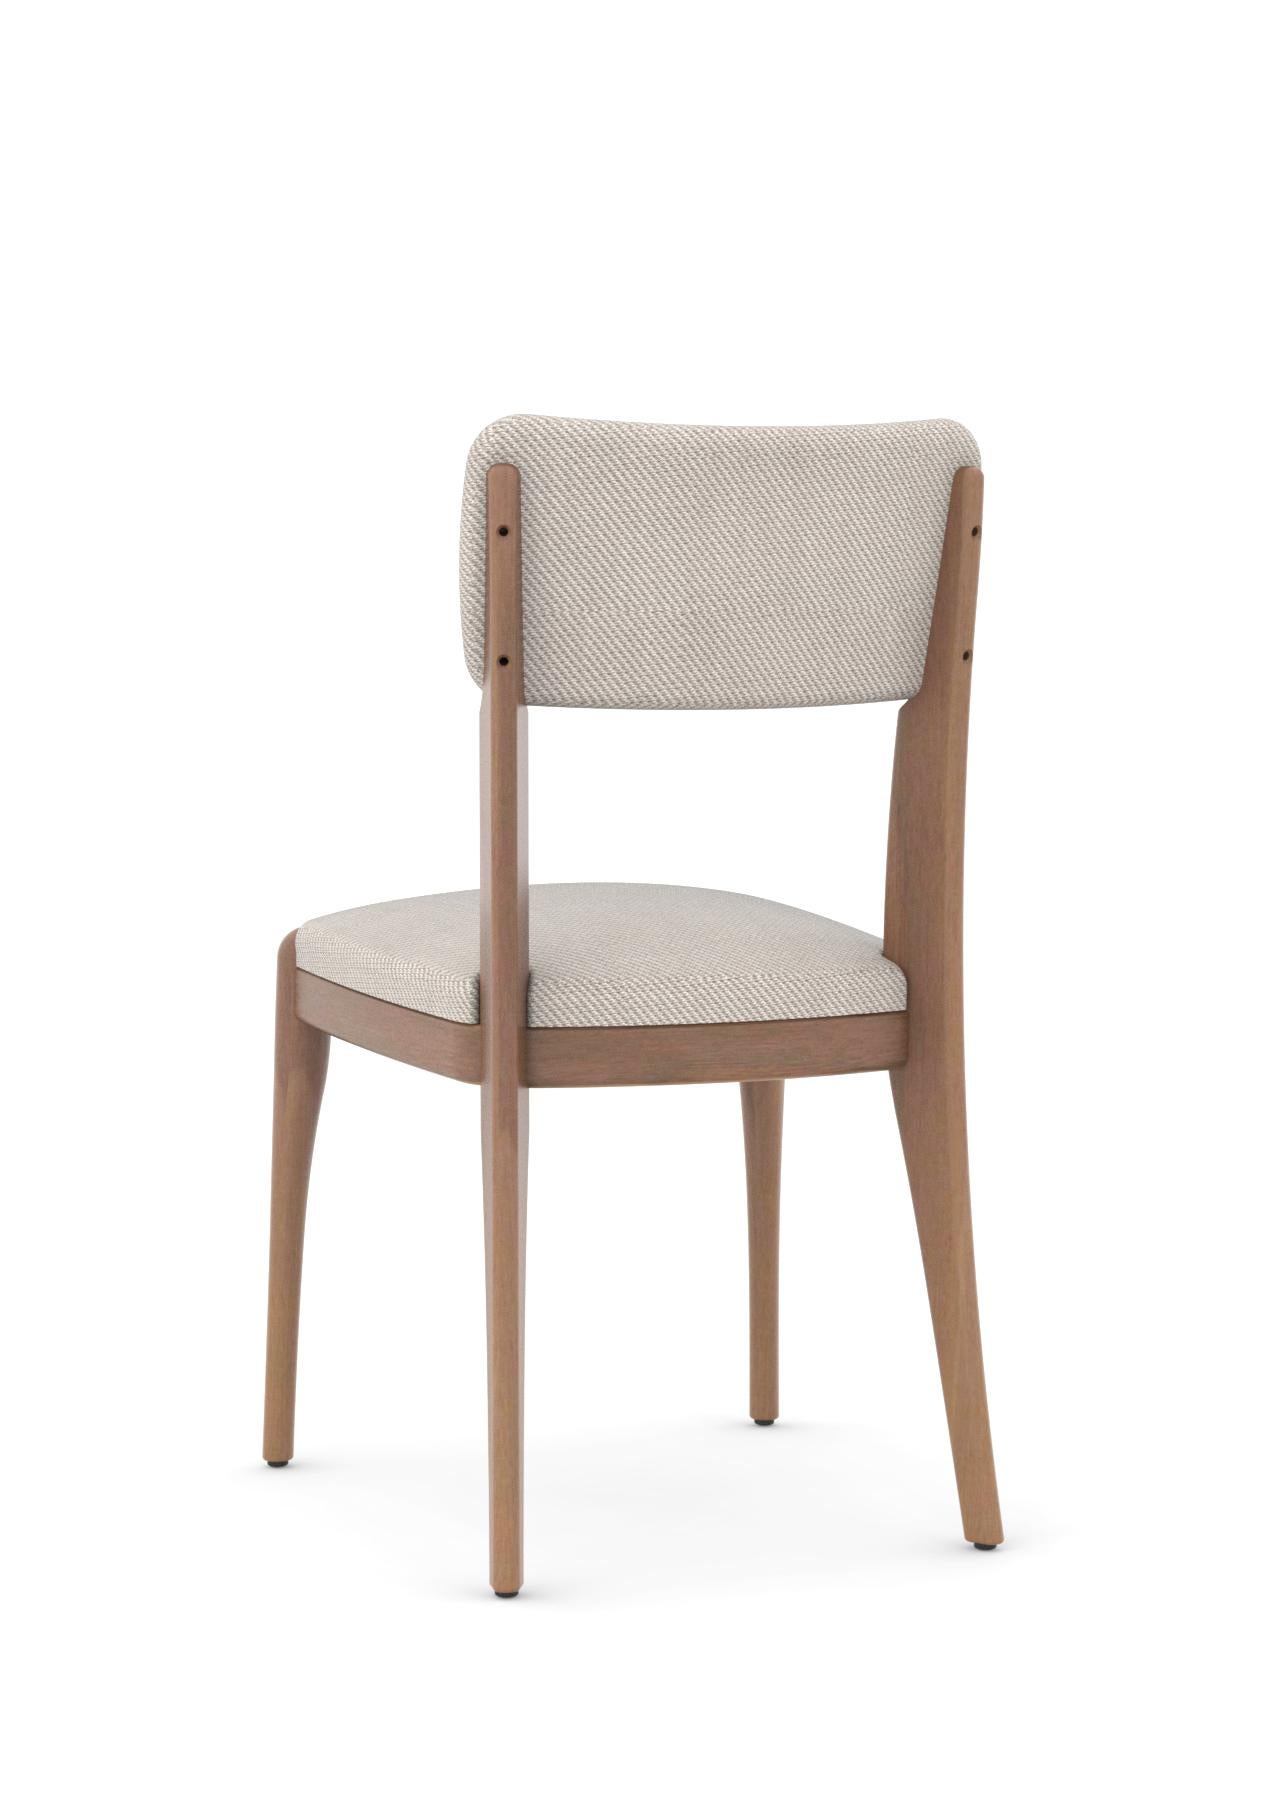 Dutch Revised Finchdean – solid walnut dining chair